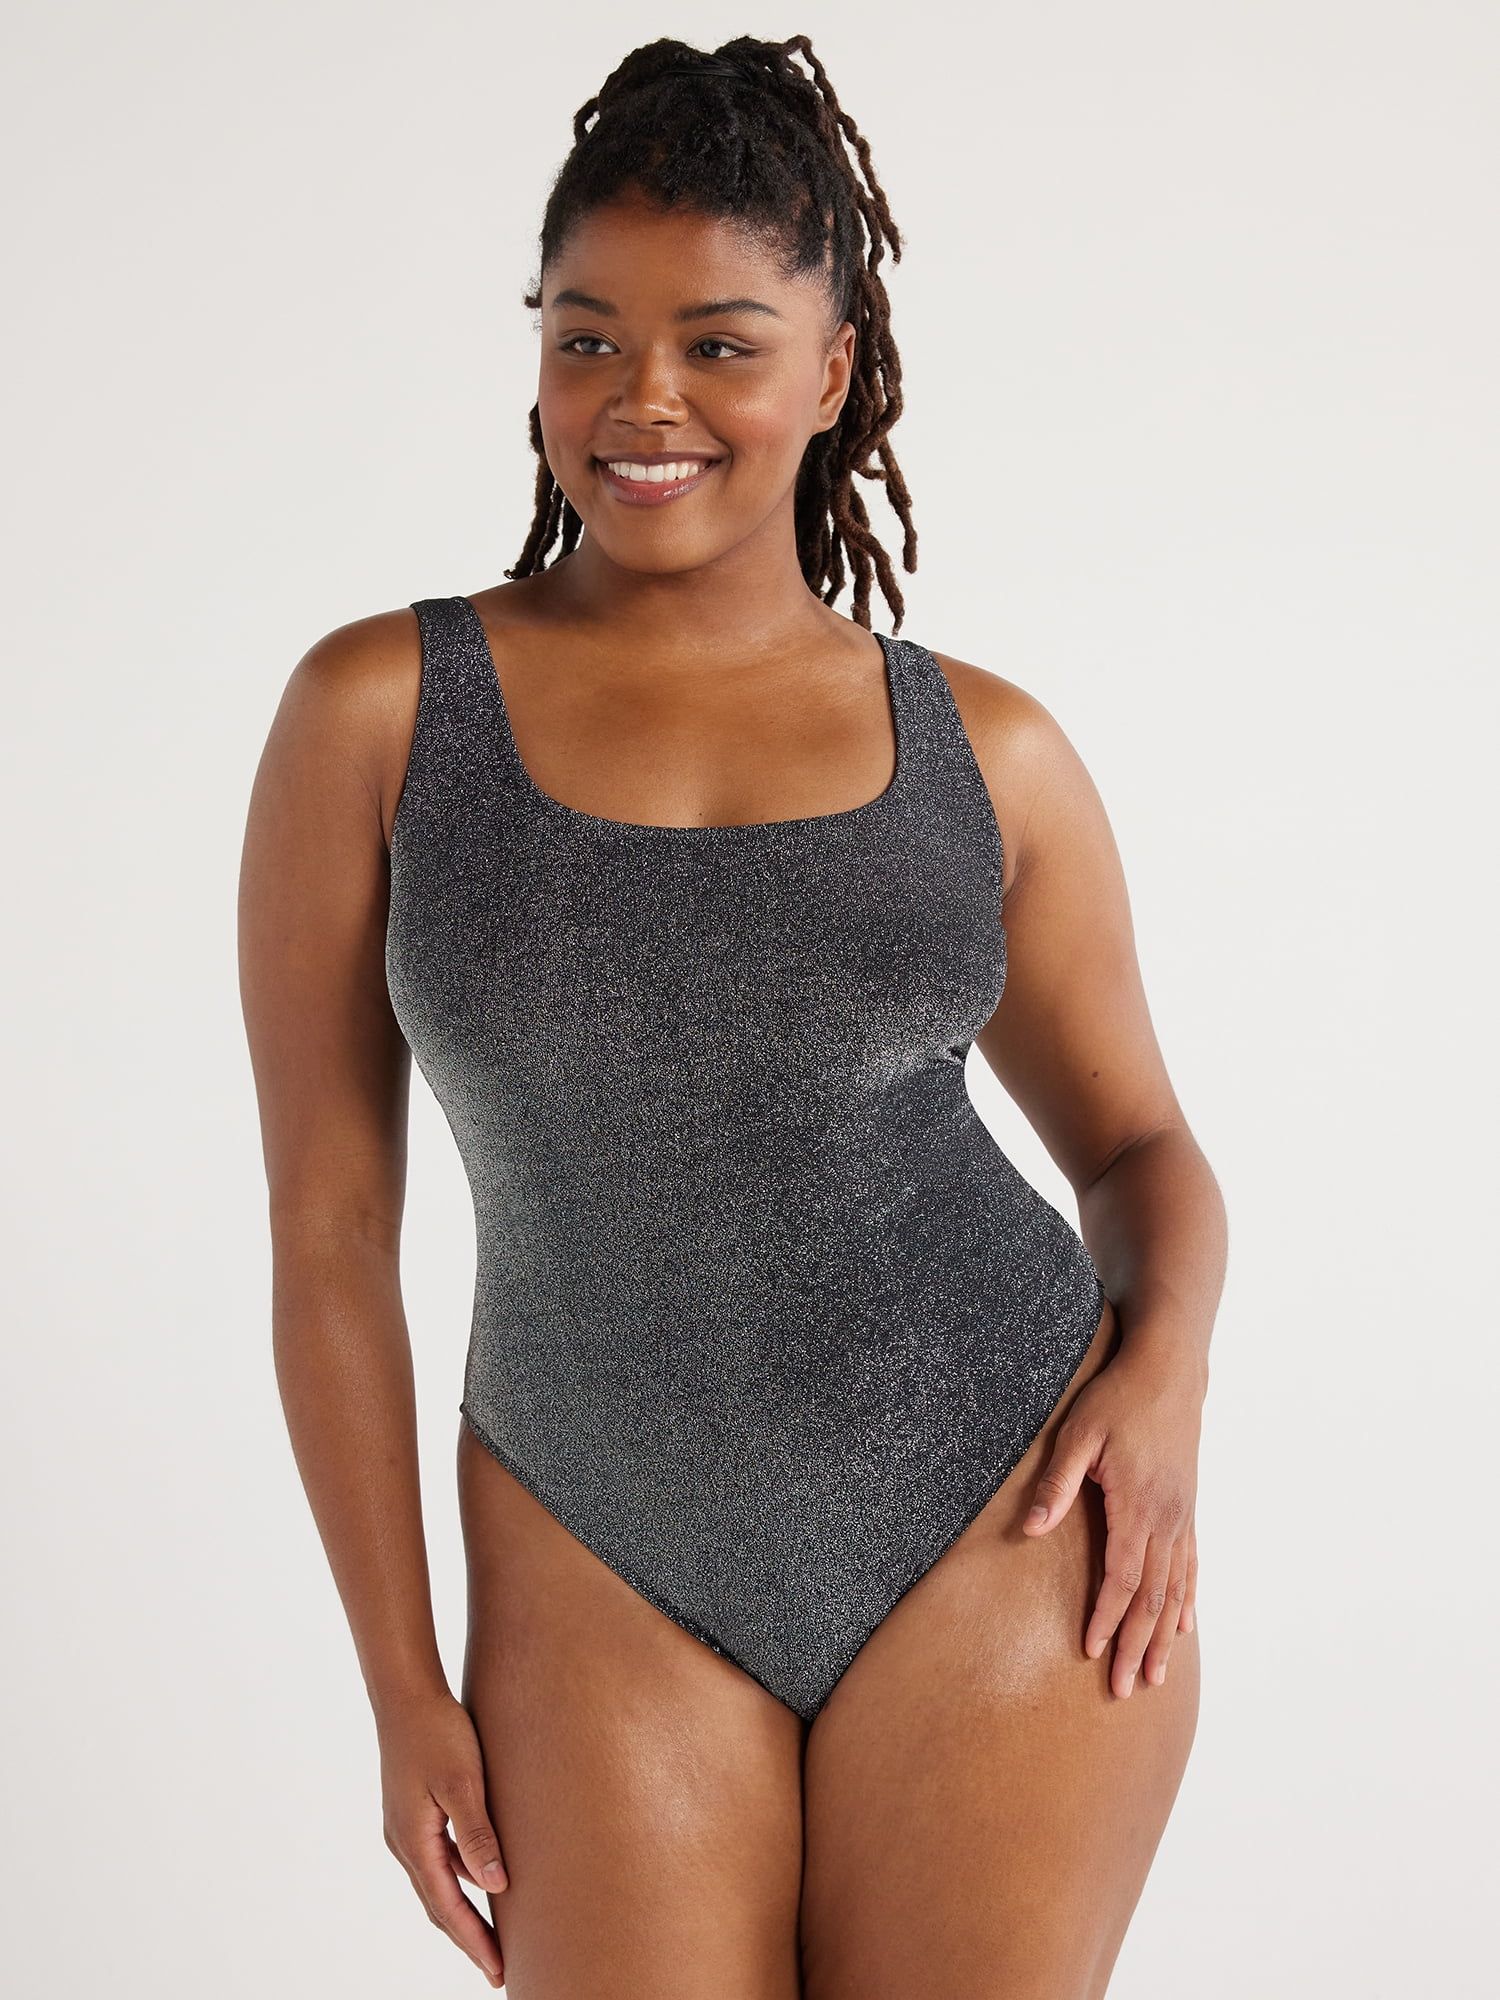 Love & Sports Women's Metallic Scooped Back Tank One-Piece Swimsuit, Black, Sizes XS-XXL | Walmart (US)